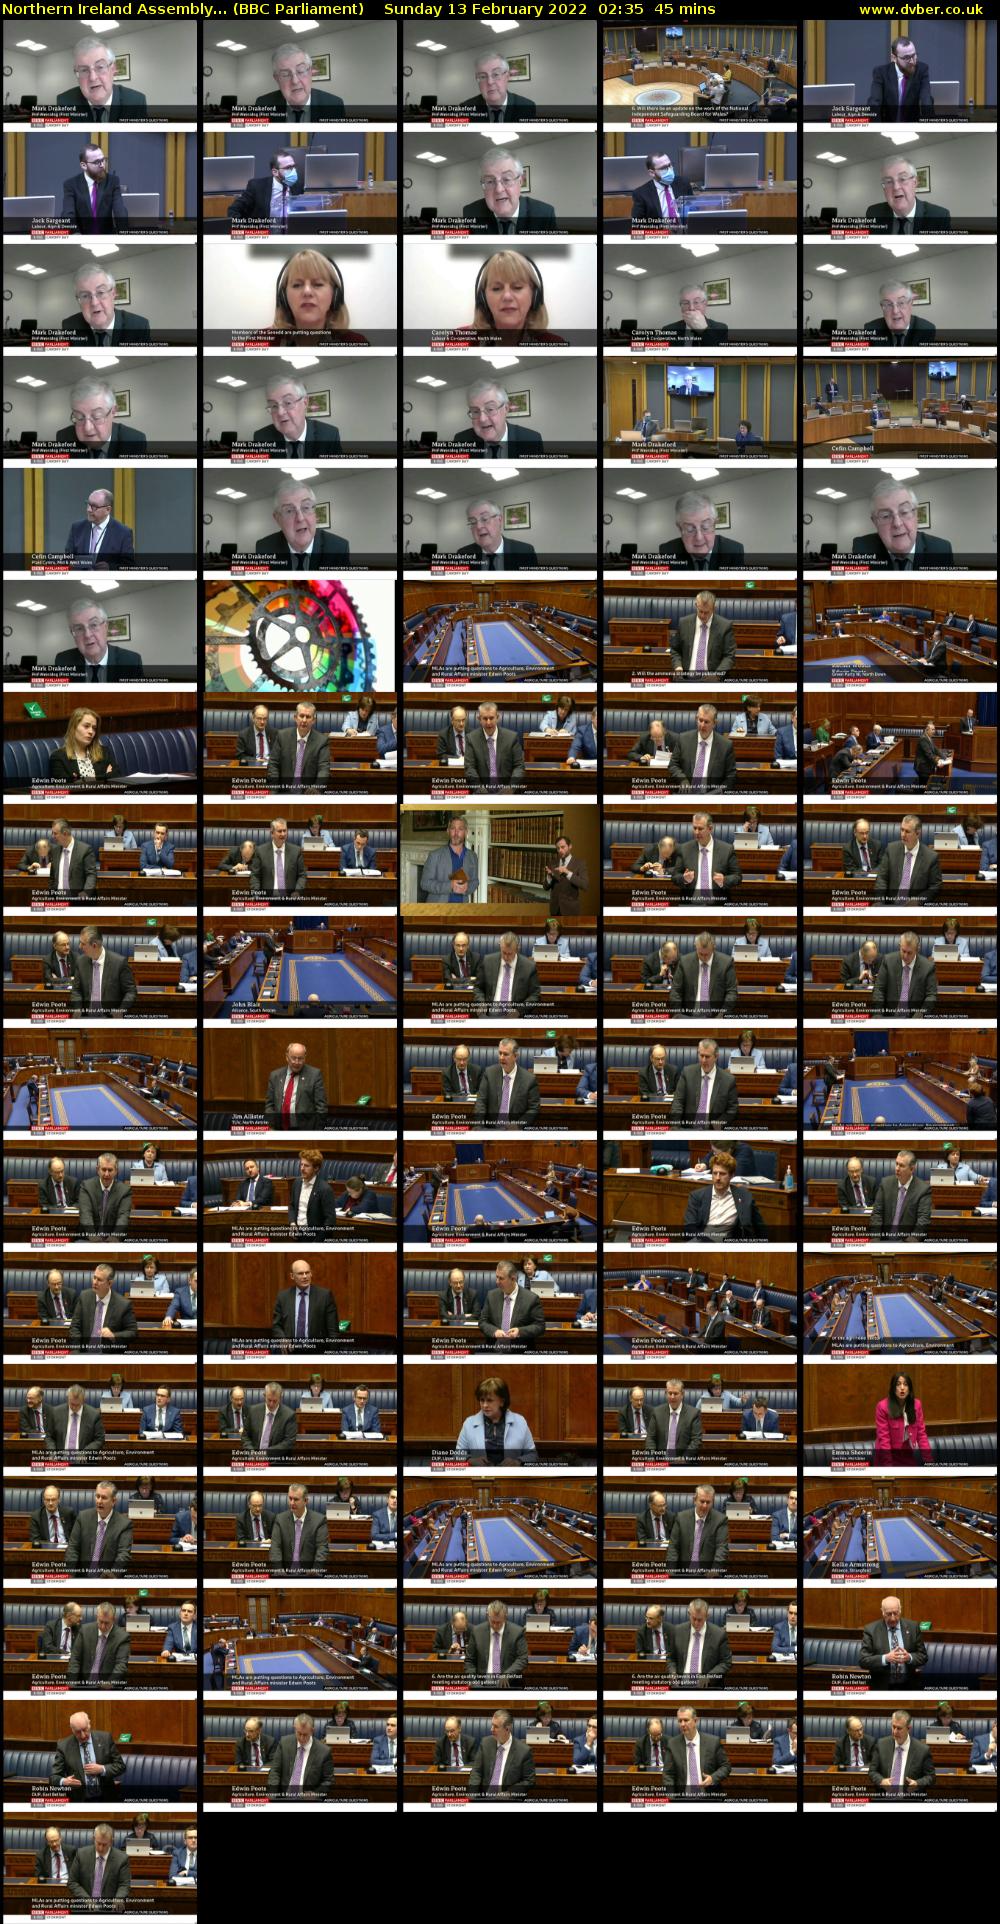 Northern Ireland Assembly... (BBC Parliament) Sunday 13 February 2022 02:35 - 03:20